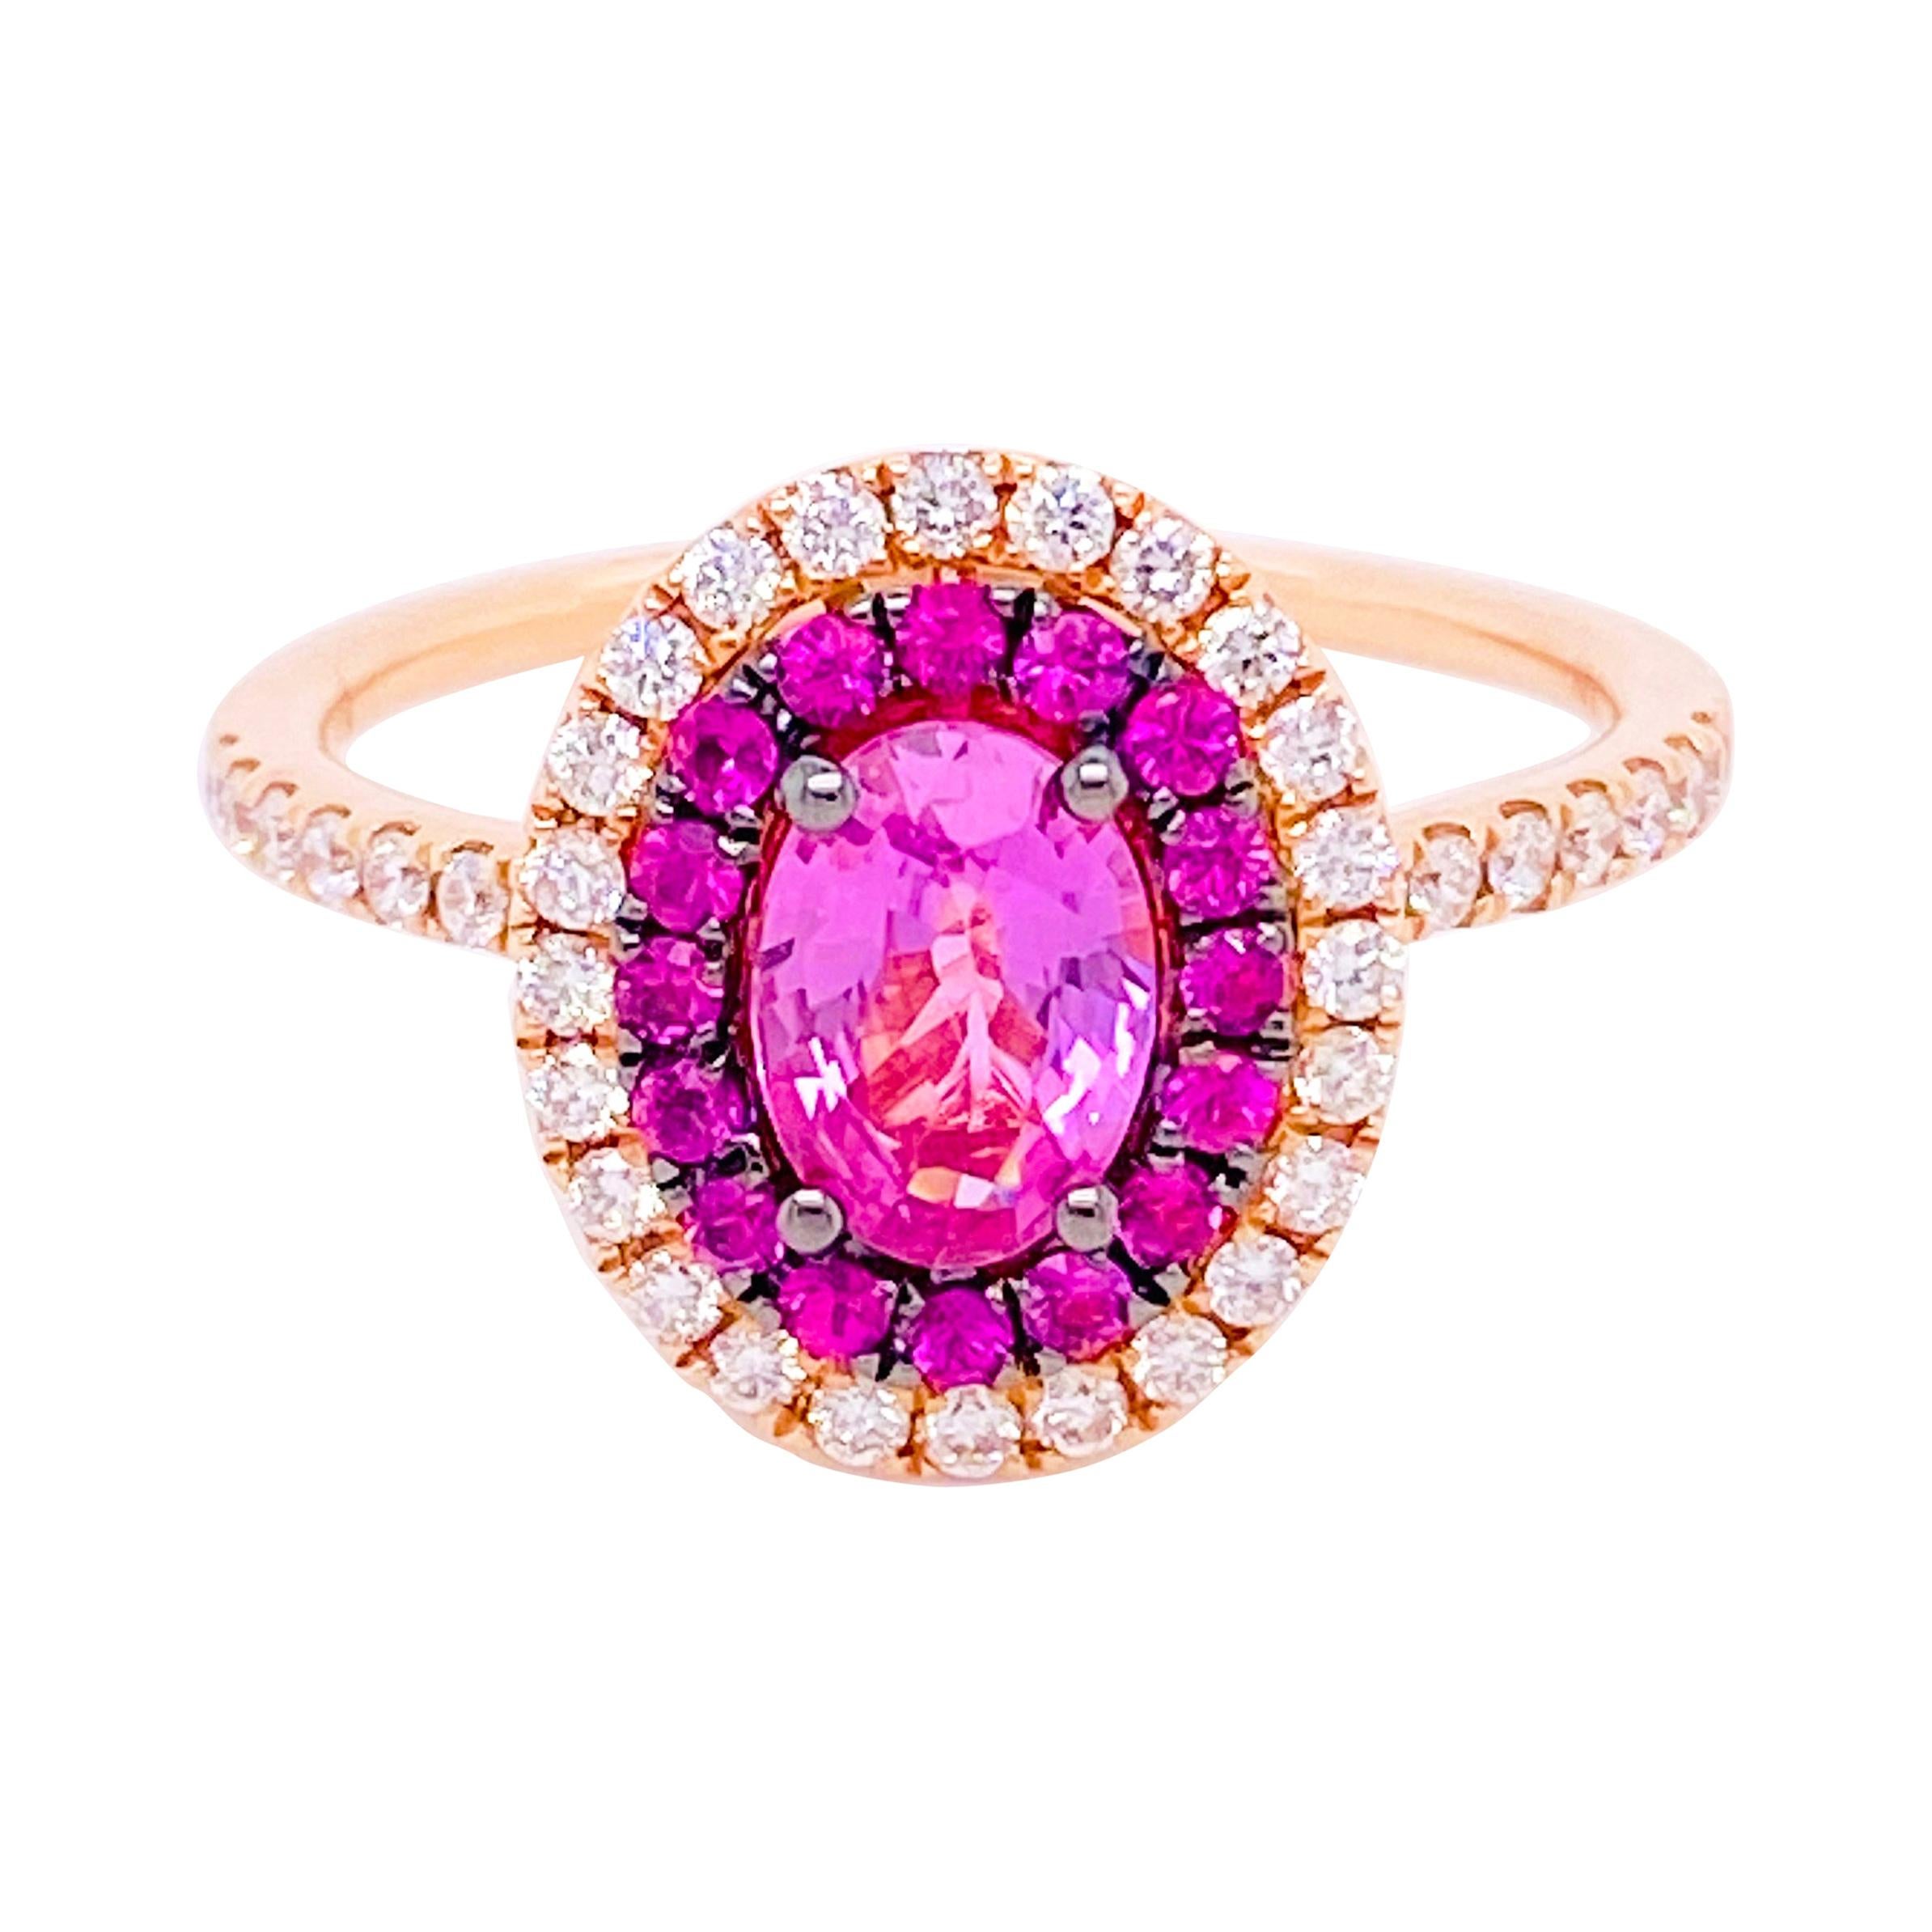 For Sale:  Pink Sapphire Diamond Ring, 14 Karat Rose Gold, Fashion, Halo, 1.22 Carat